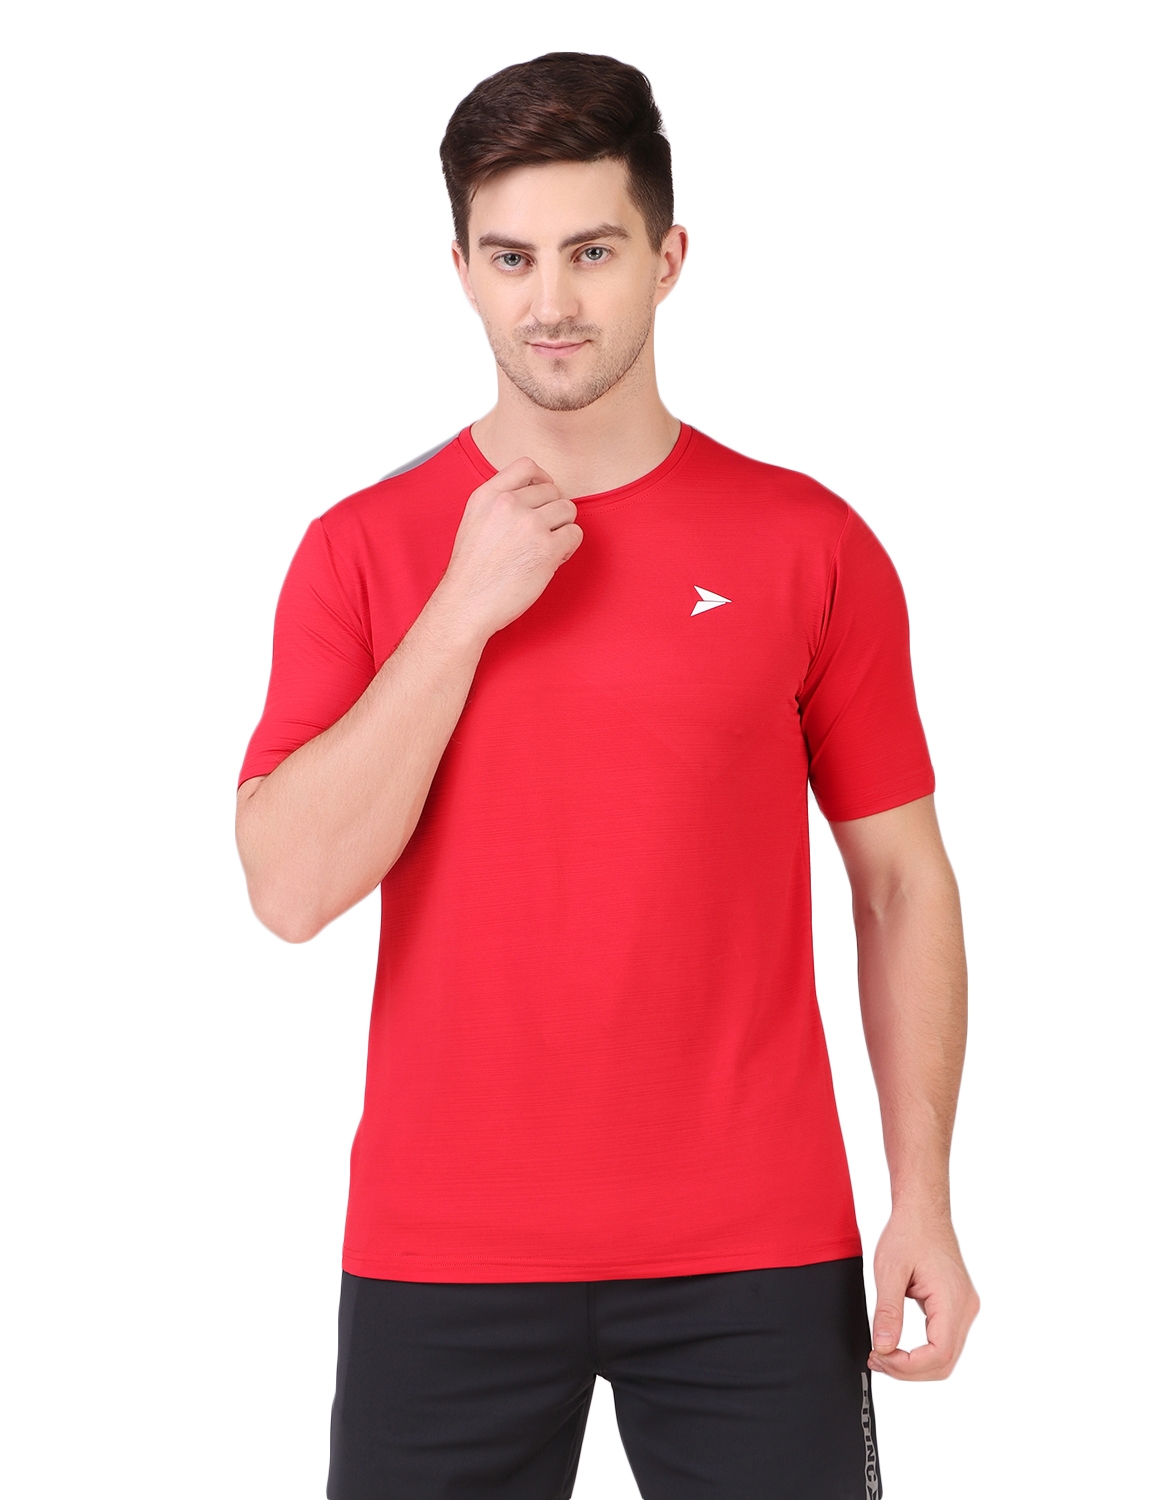 Fitinc | Fitinc Men's Round Neck Slimfit Gym & Active Sports Red T-Shirt